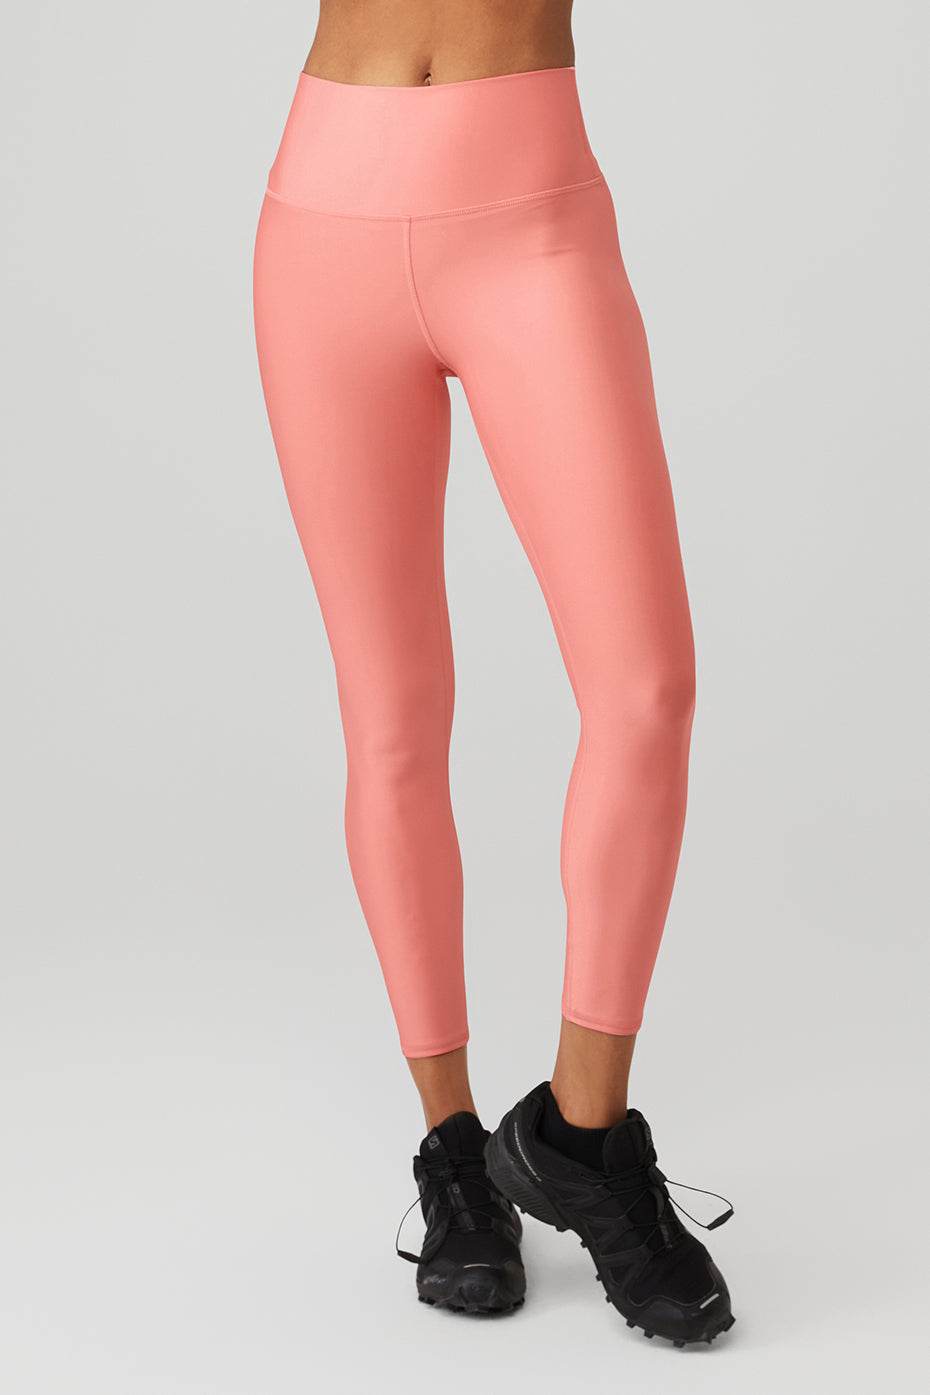 Alo Yoga Alo Soft Leggings Dusty Pink Mauve Color Size M